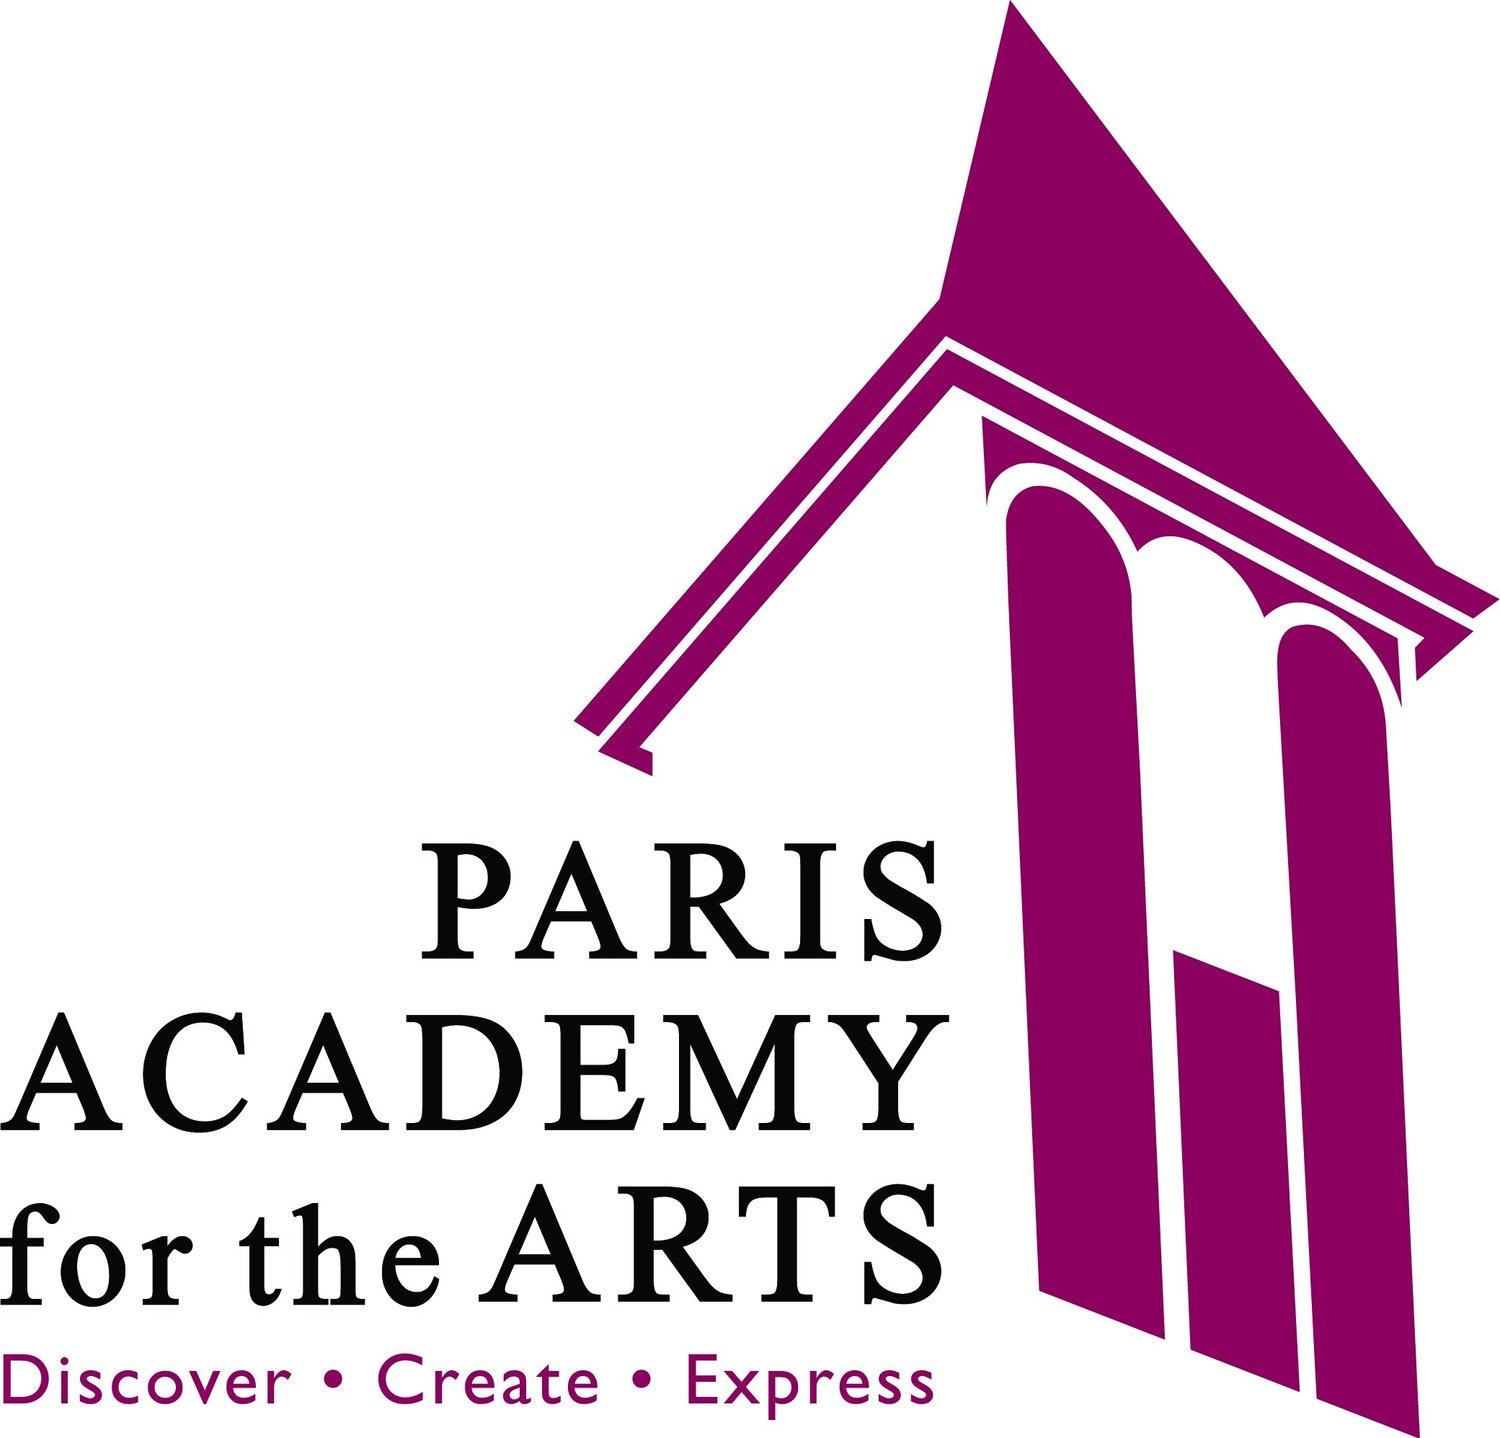 Paris Academy for the Arts